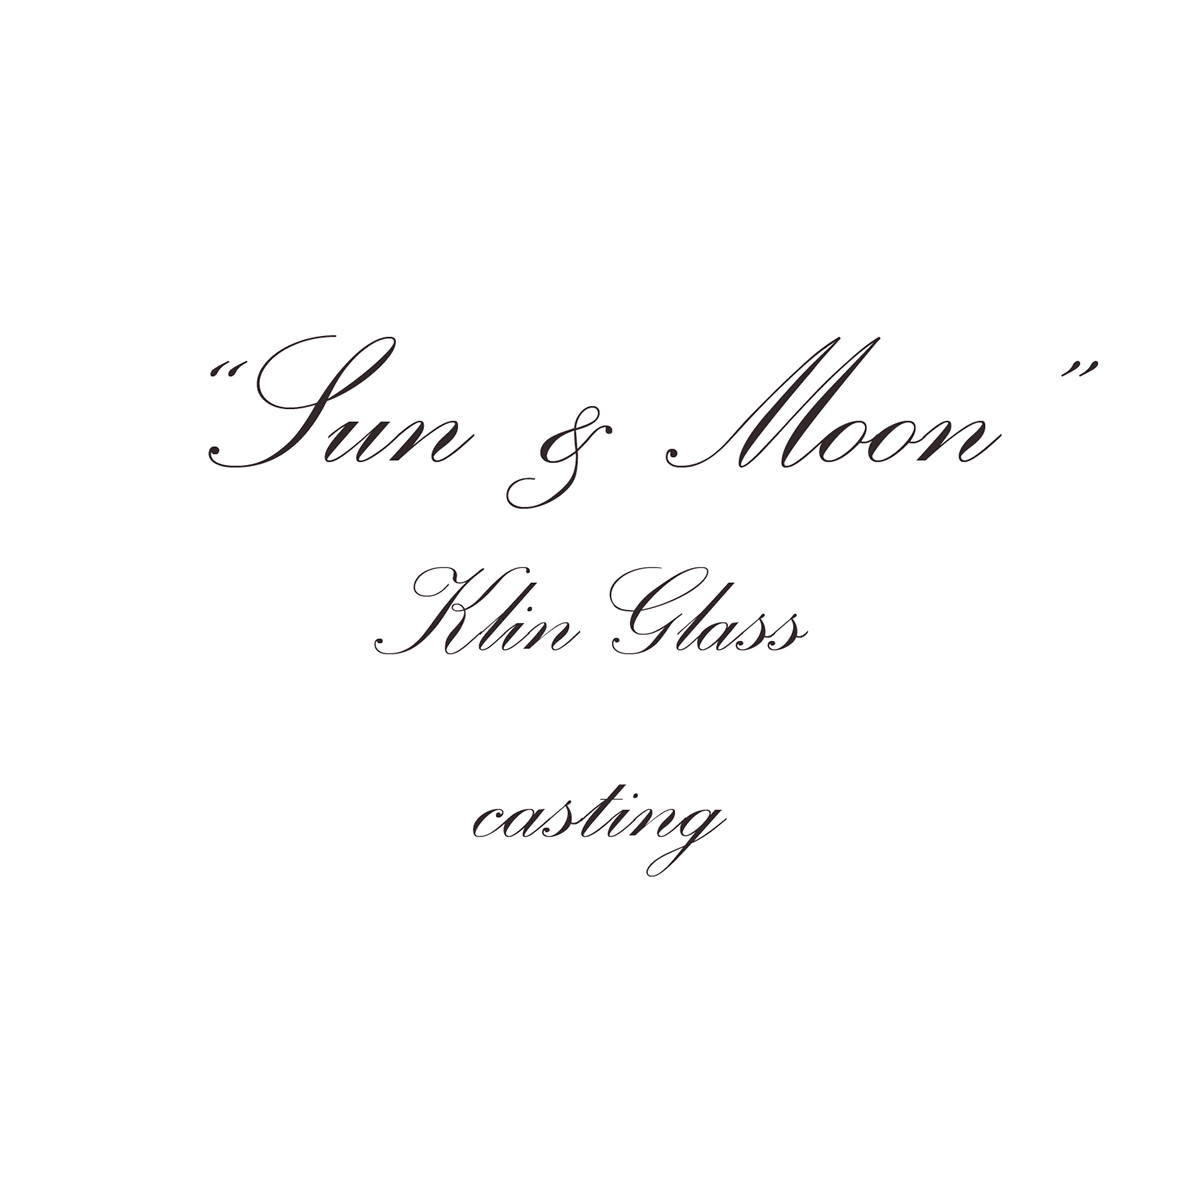 glass Klin Sun moon casting